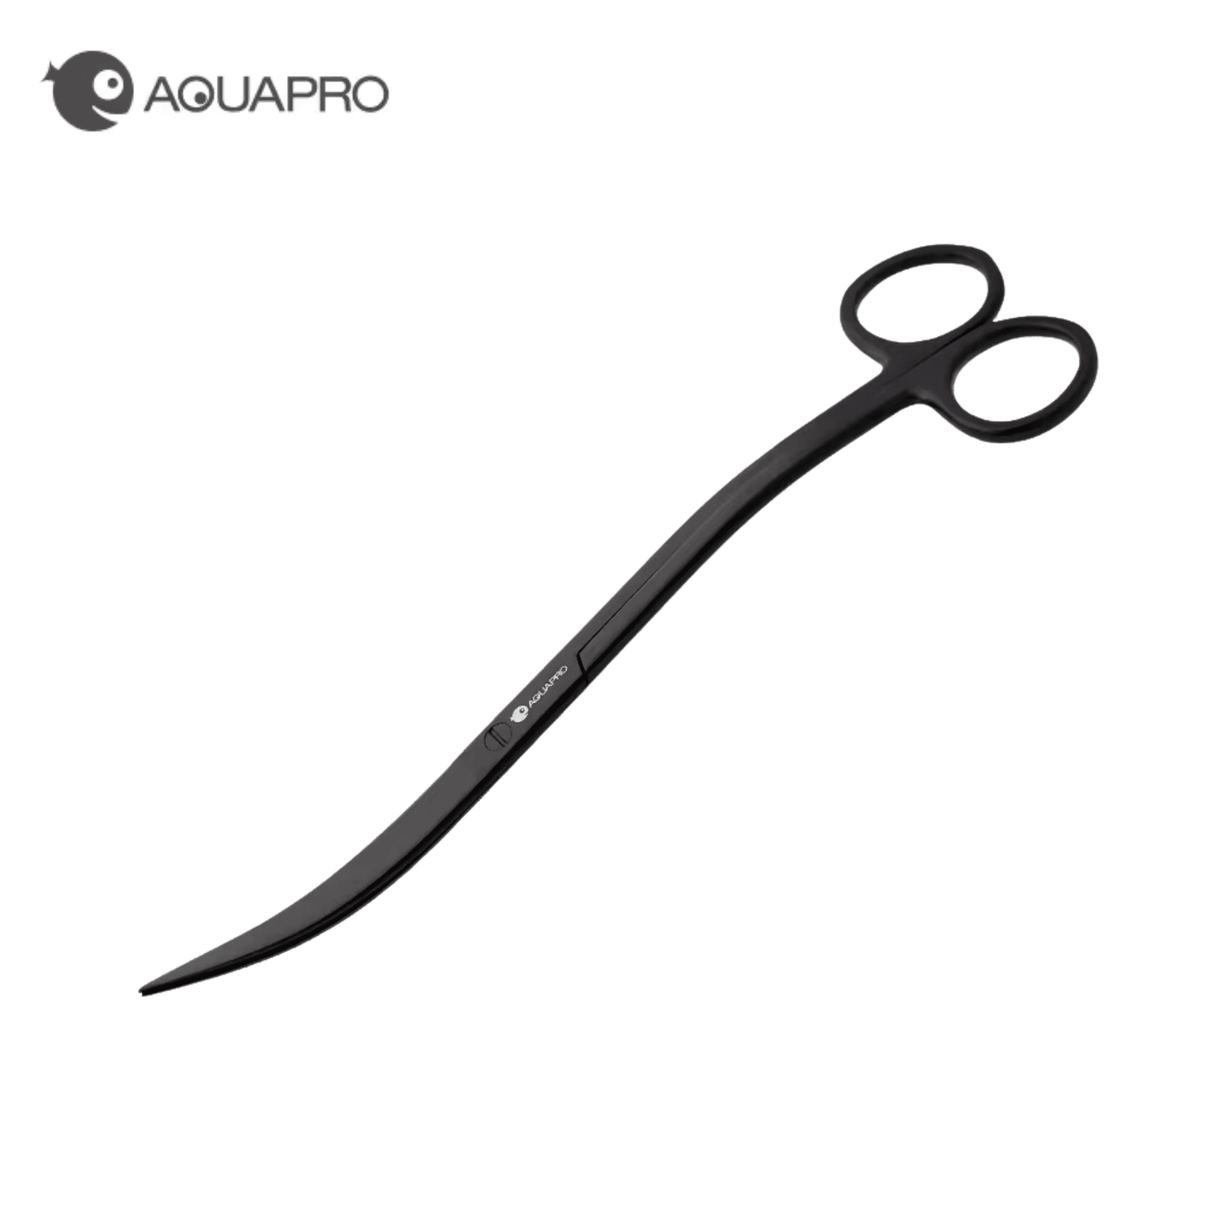 Aquapro Pro Scissors Black - Wavy